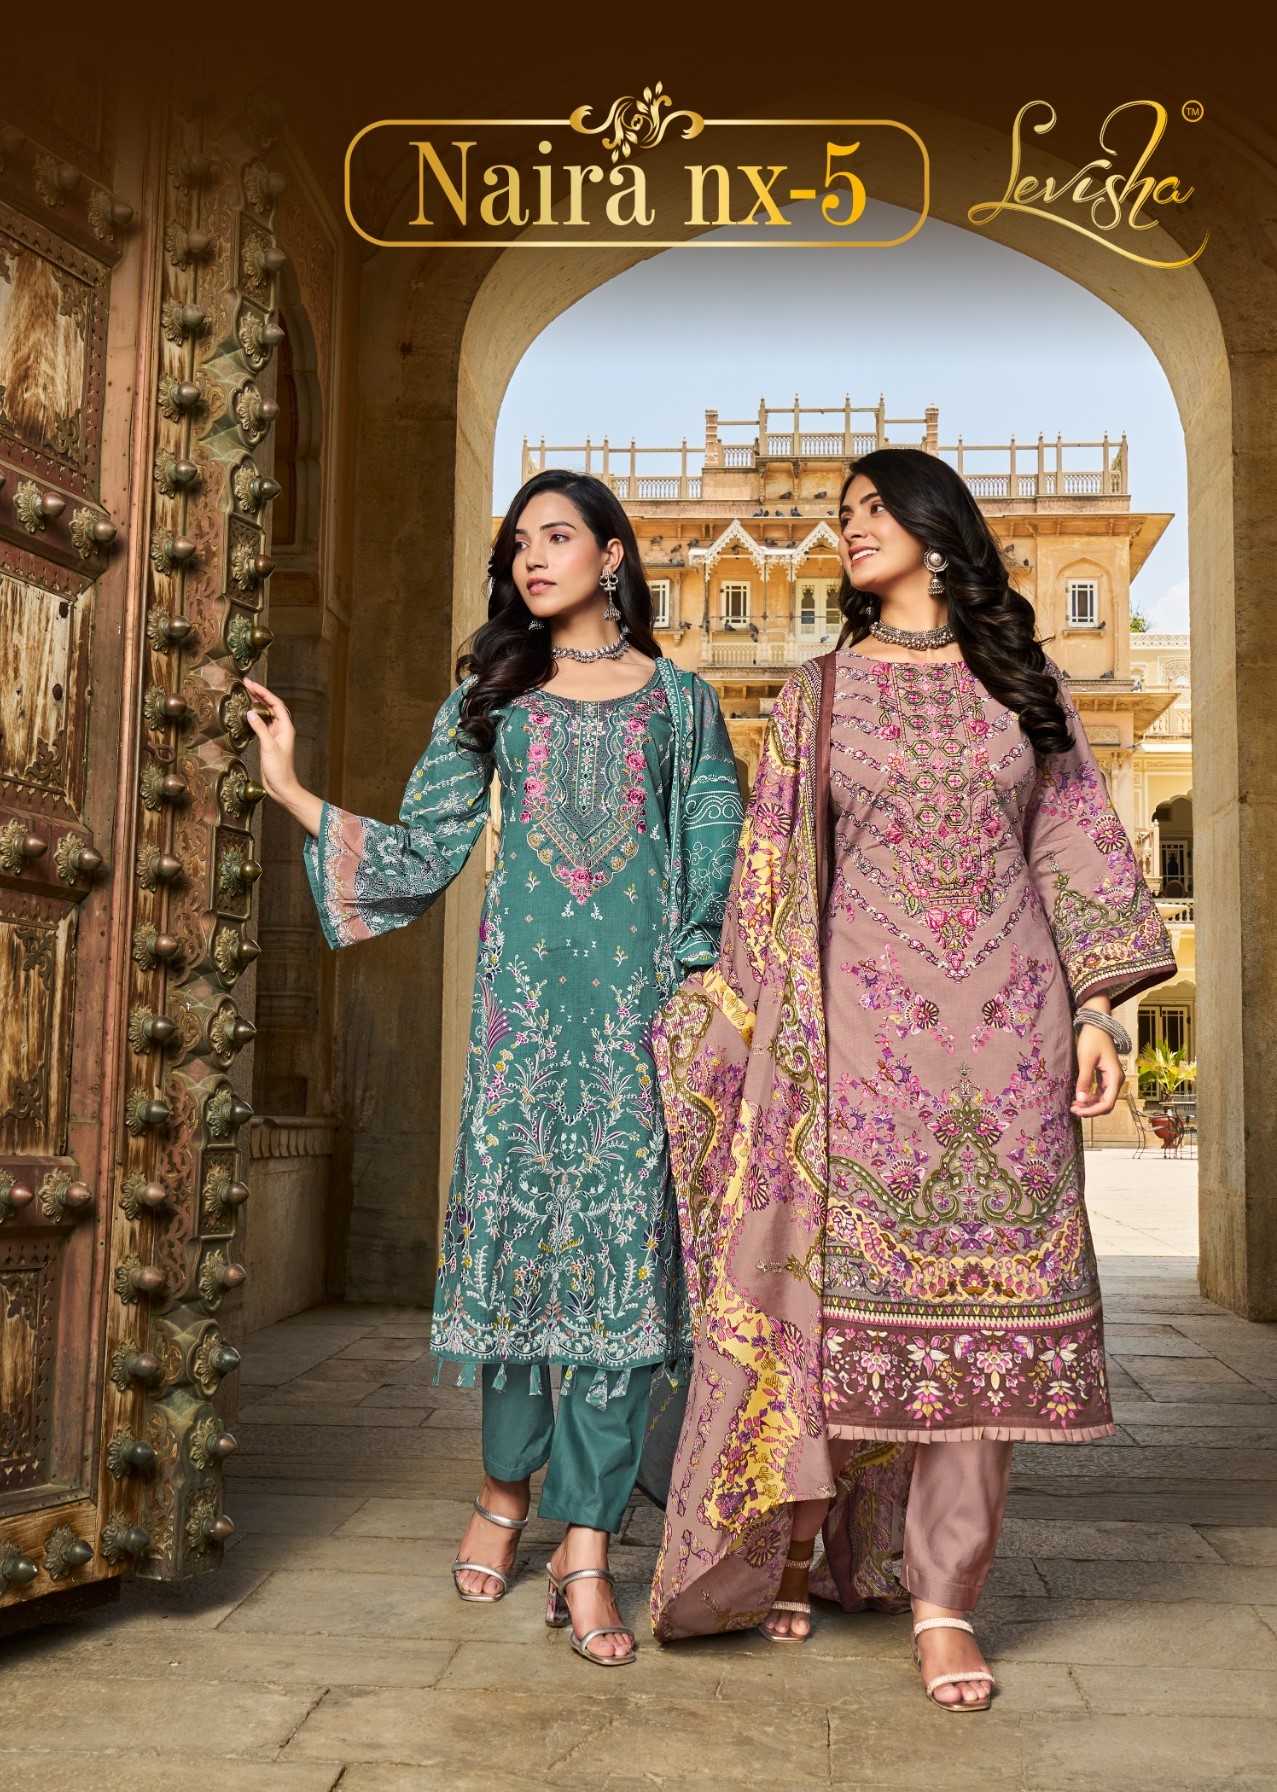 levisha naira nx vol 5 pretty look camric cotton pakistani style salwar suit material